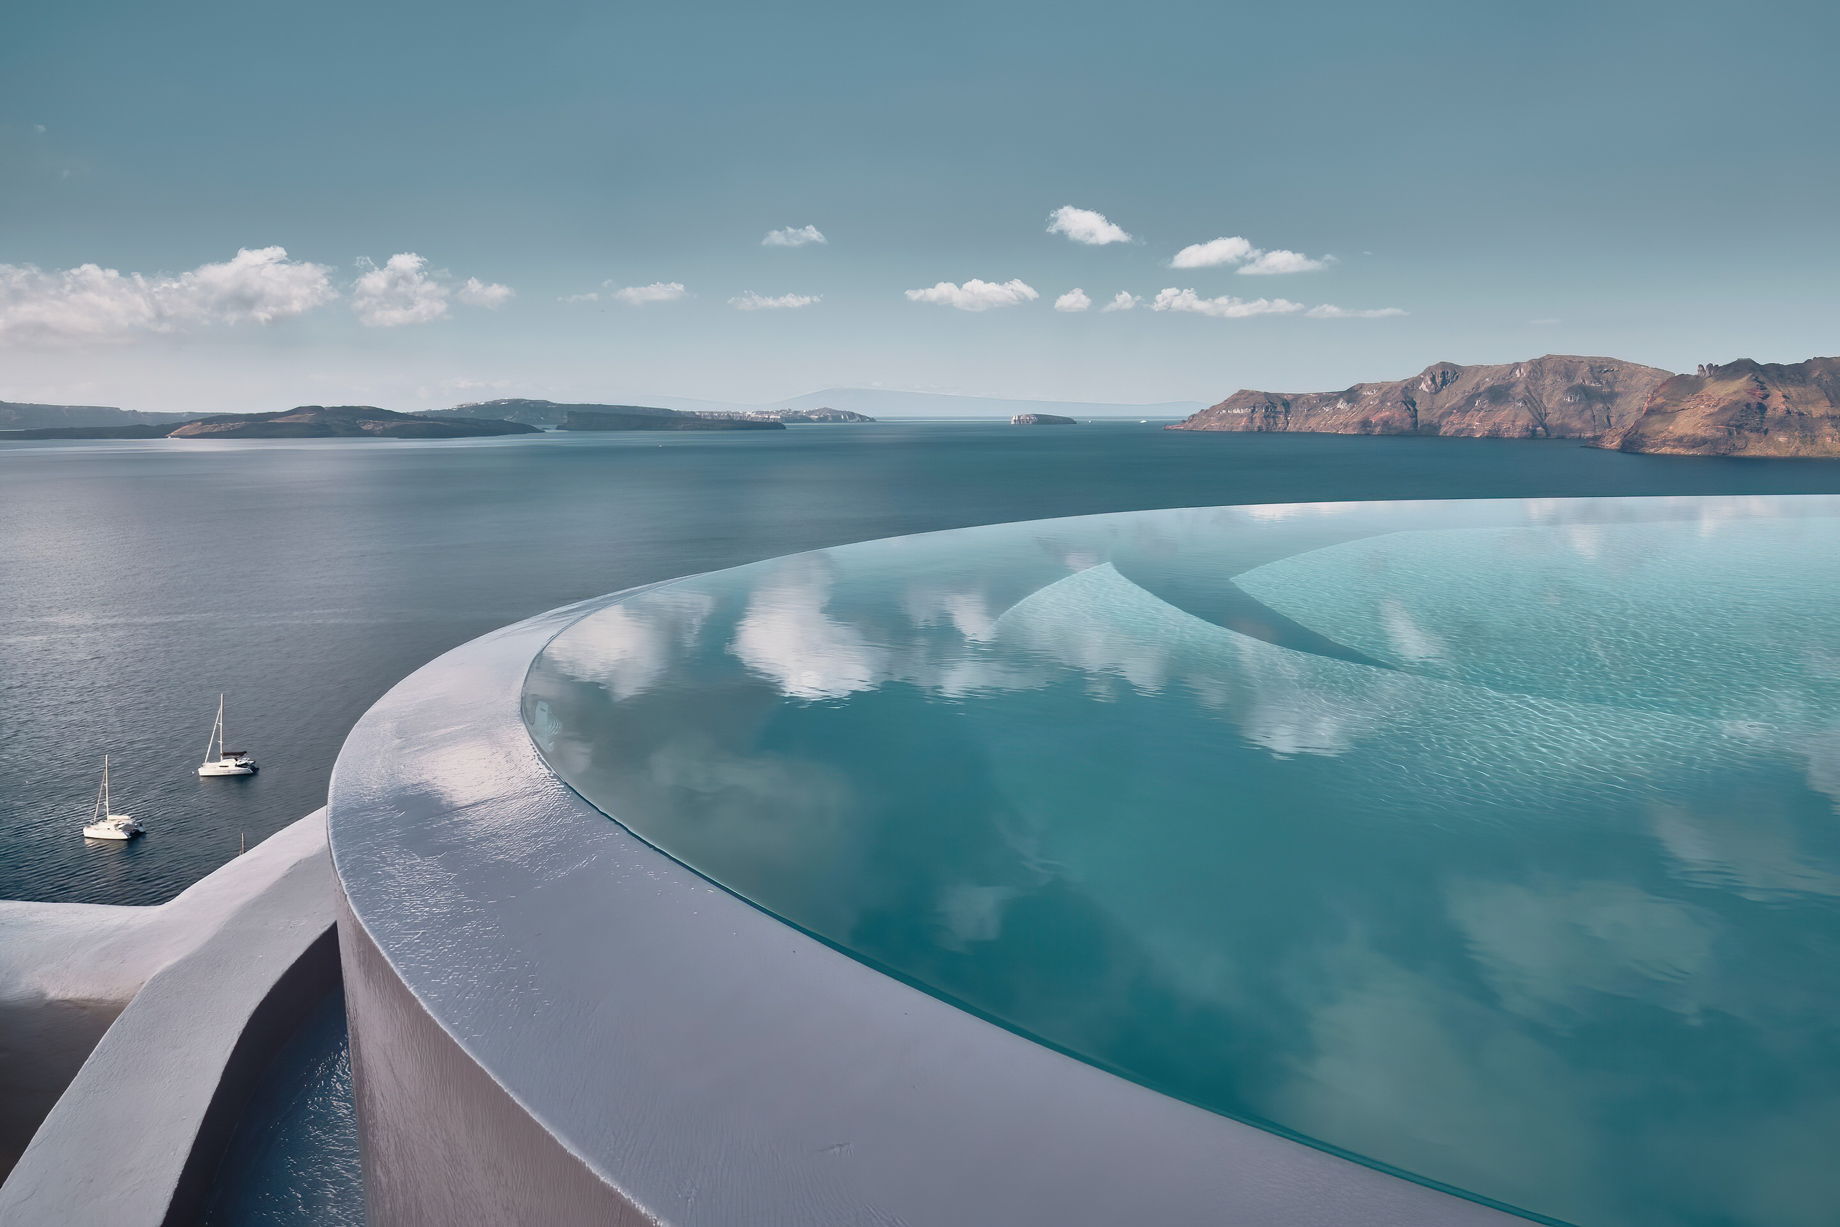 Mystique Hotel Santorini – Oia, Santorini Island, Greece – Clifftop Infinity Pool Ocean View